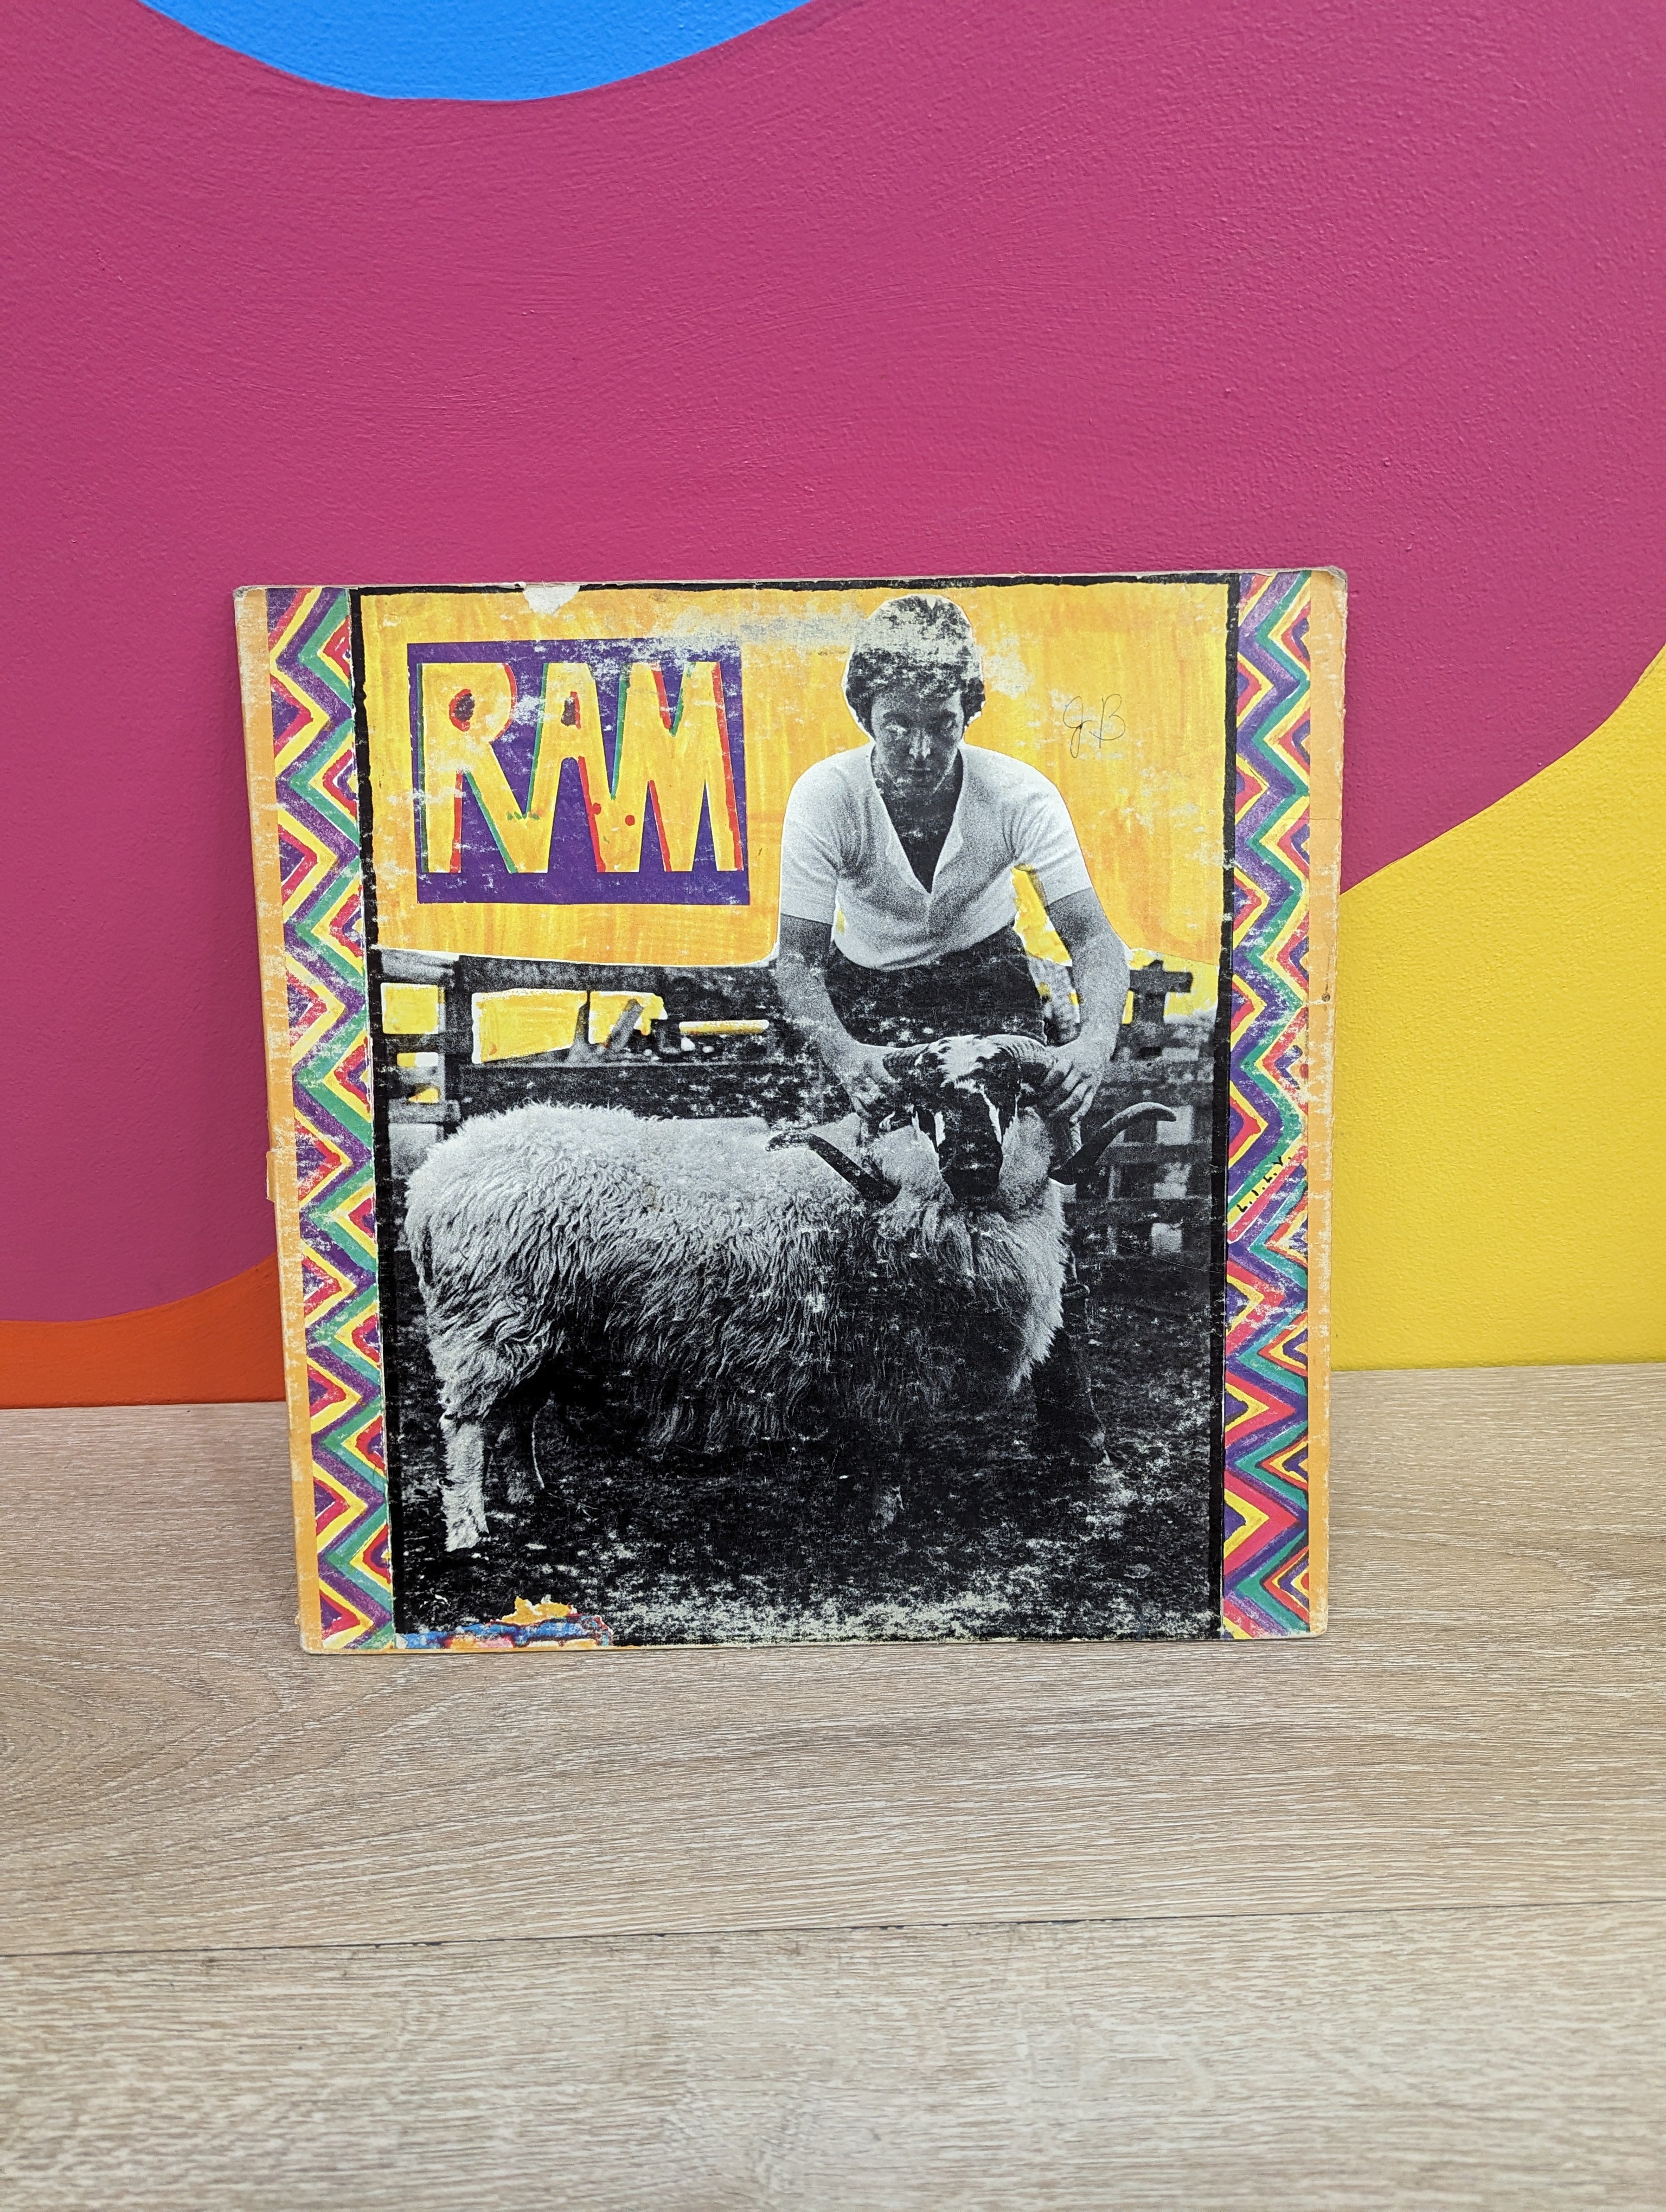 Paul And Linda McCartney – Ram Vinyl